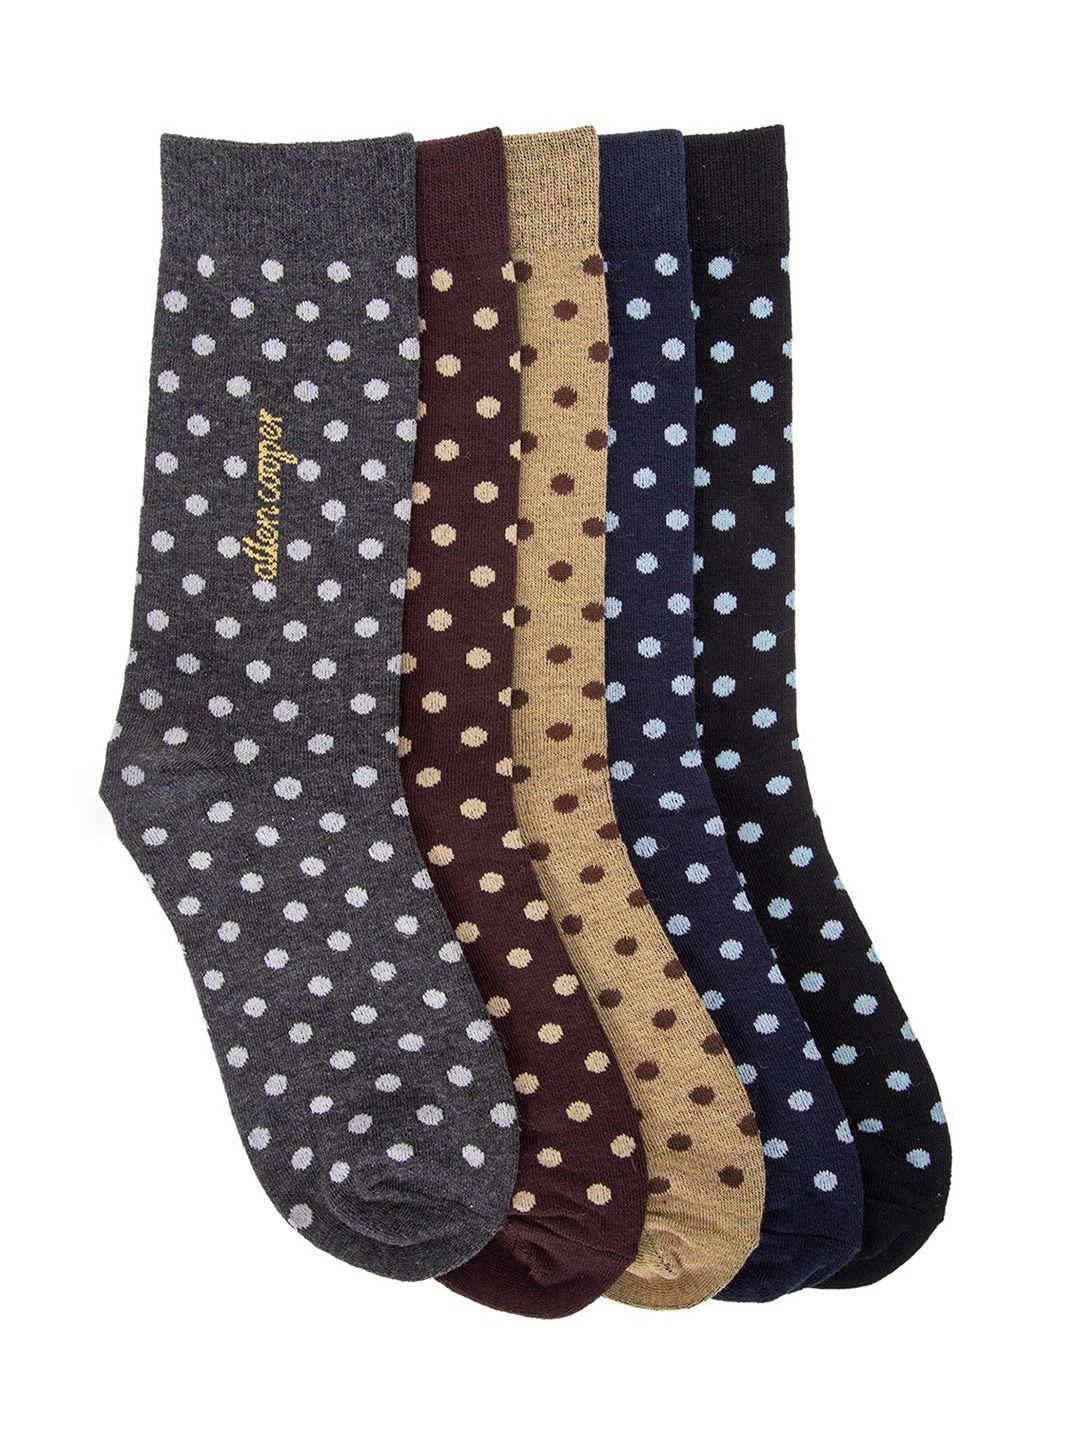 allen-cooper-men-pack-of-5-assorted-patterned-cotton-above-calf-length-socks